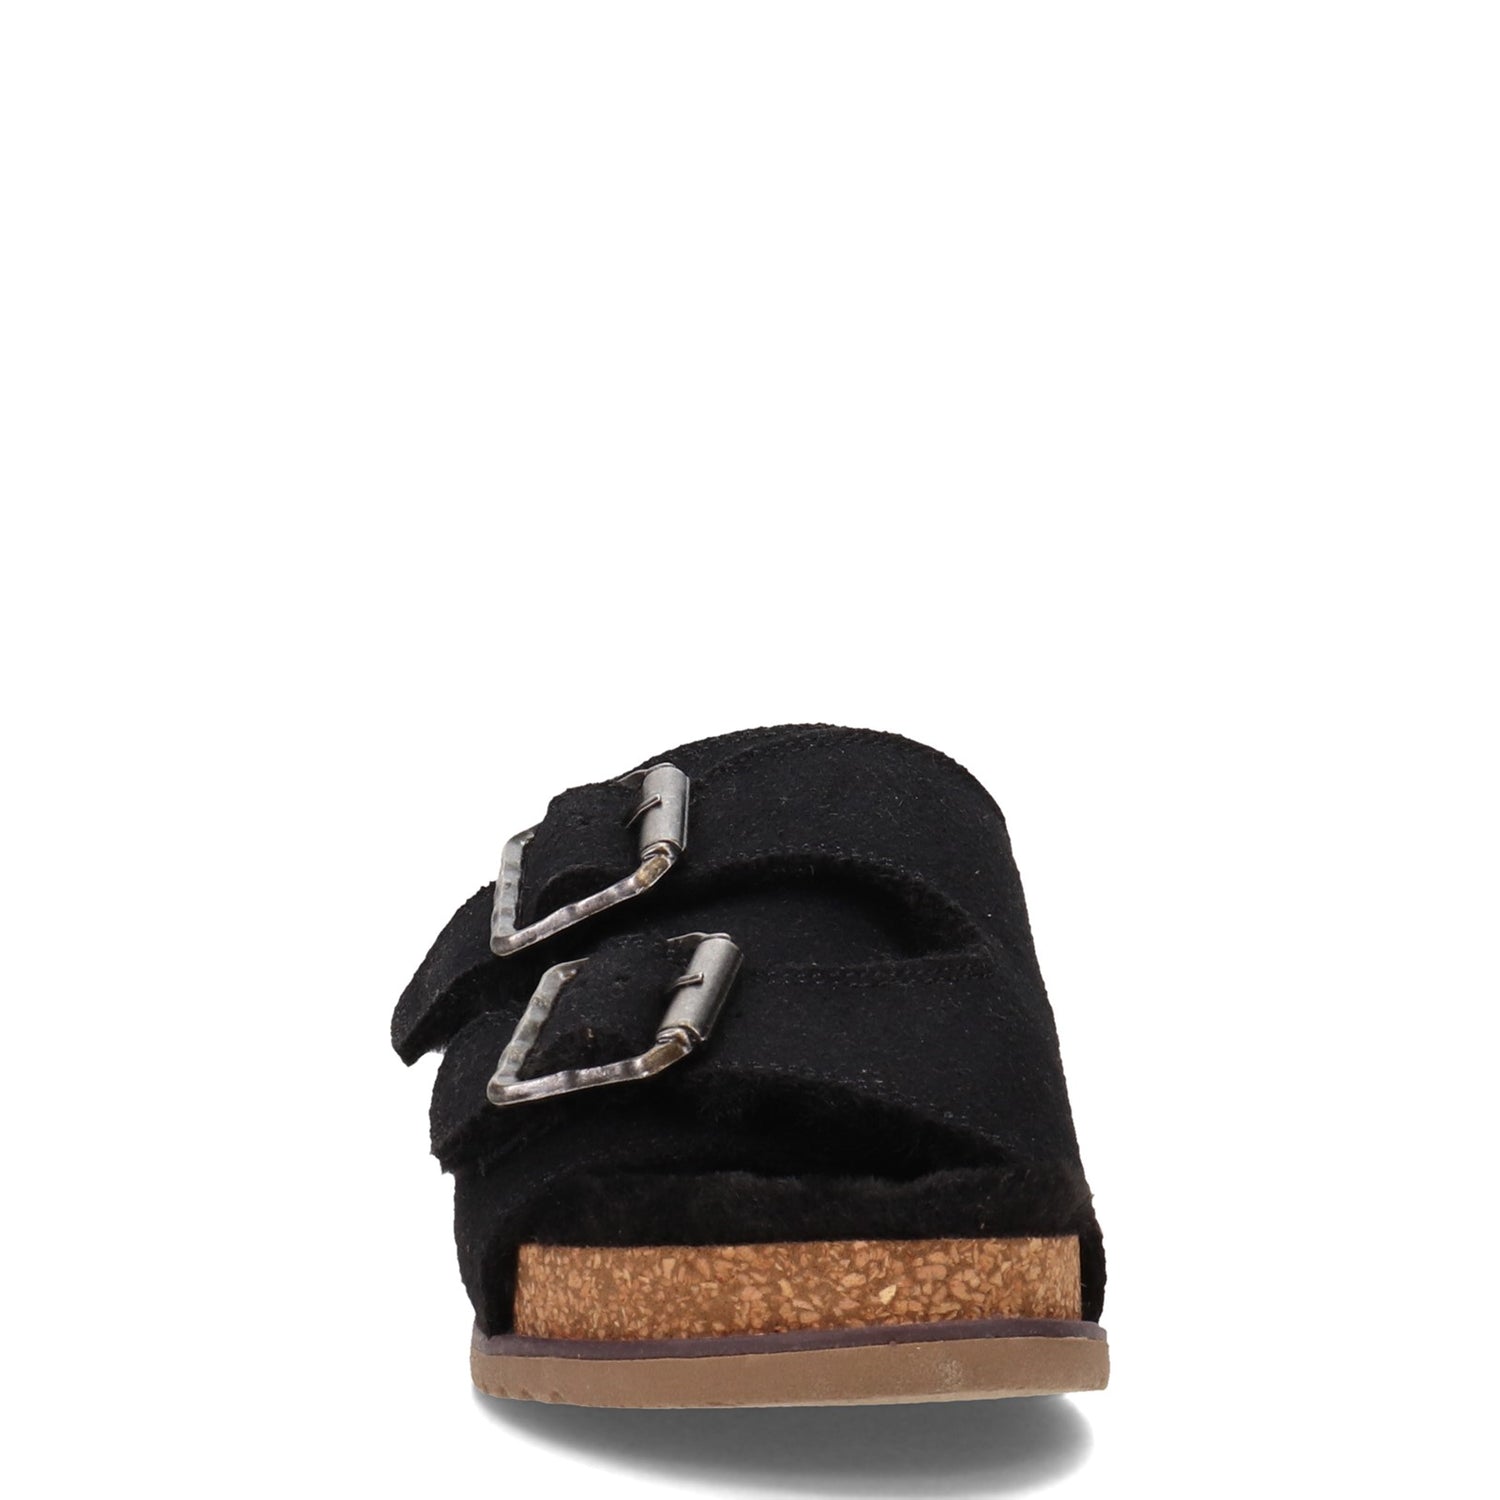 Peltz Shoes  Women's Blowfish Malibu Feelgoods-SHR Sandal BLACK BF9019SH-079